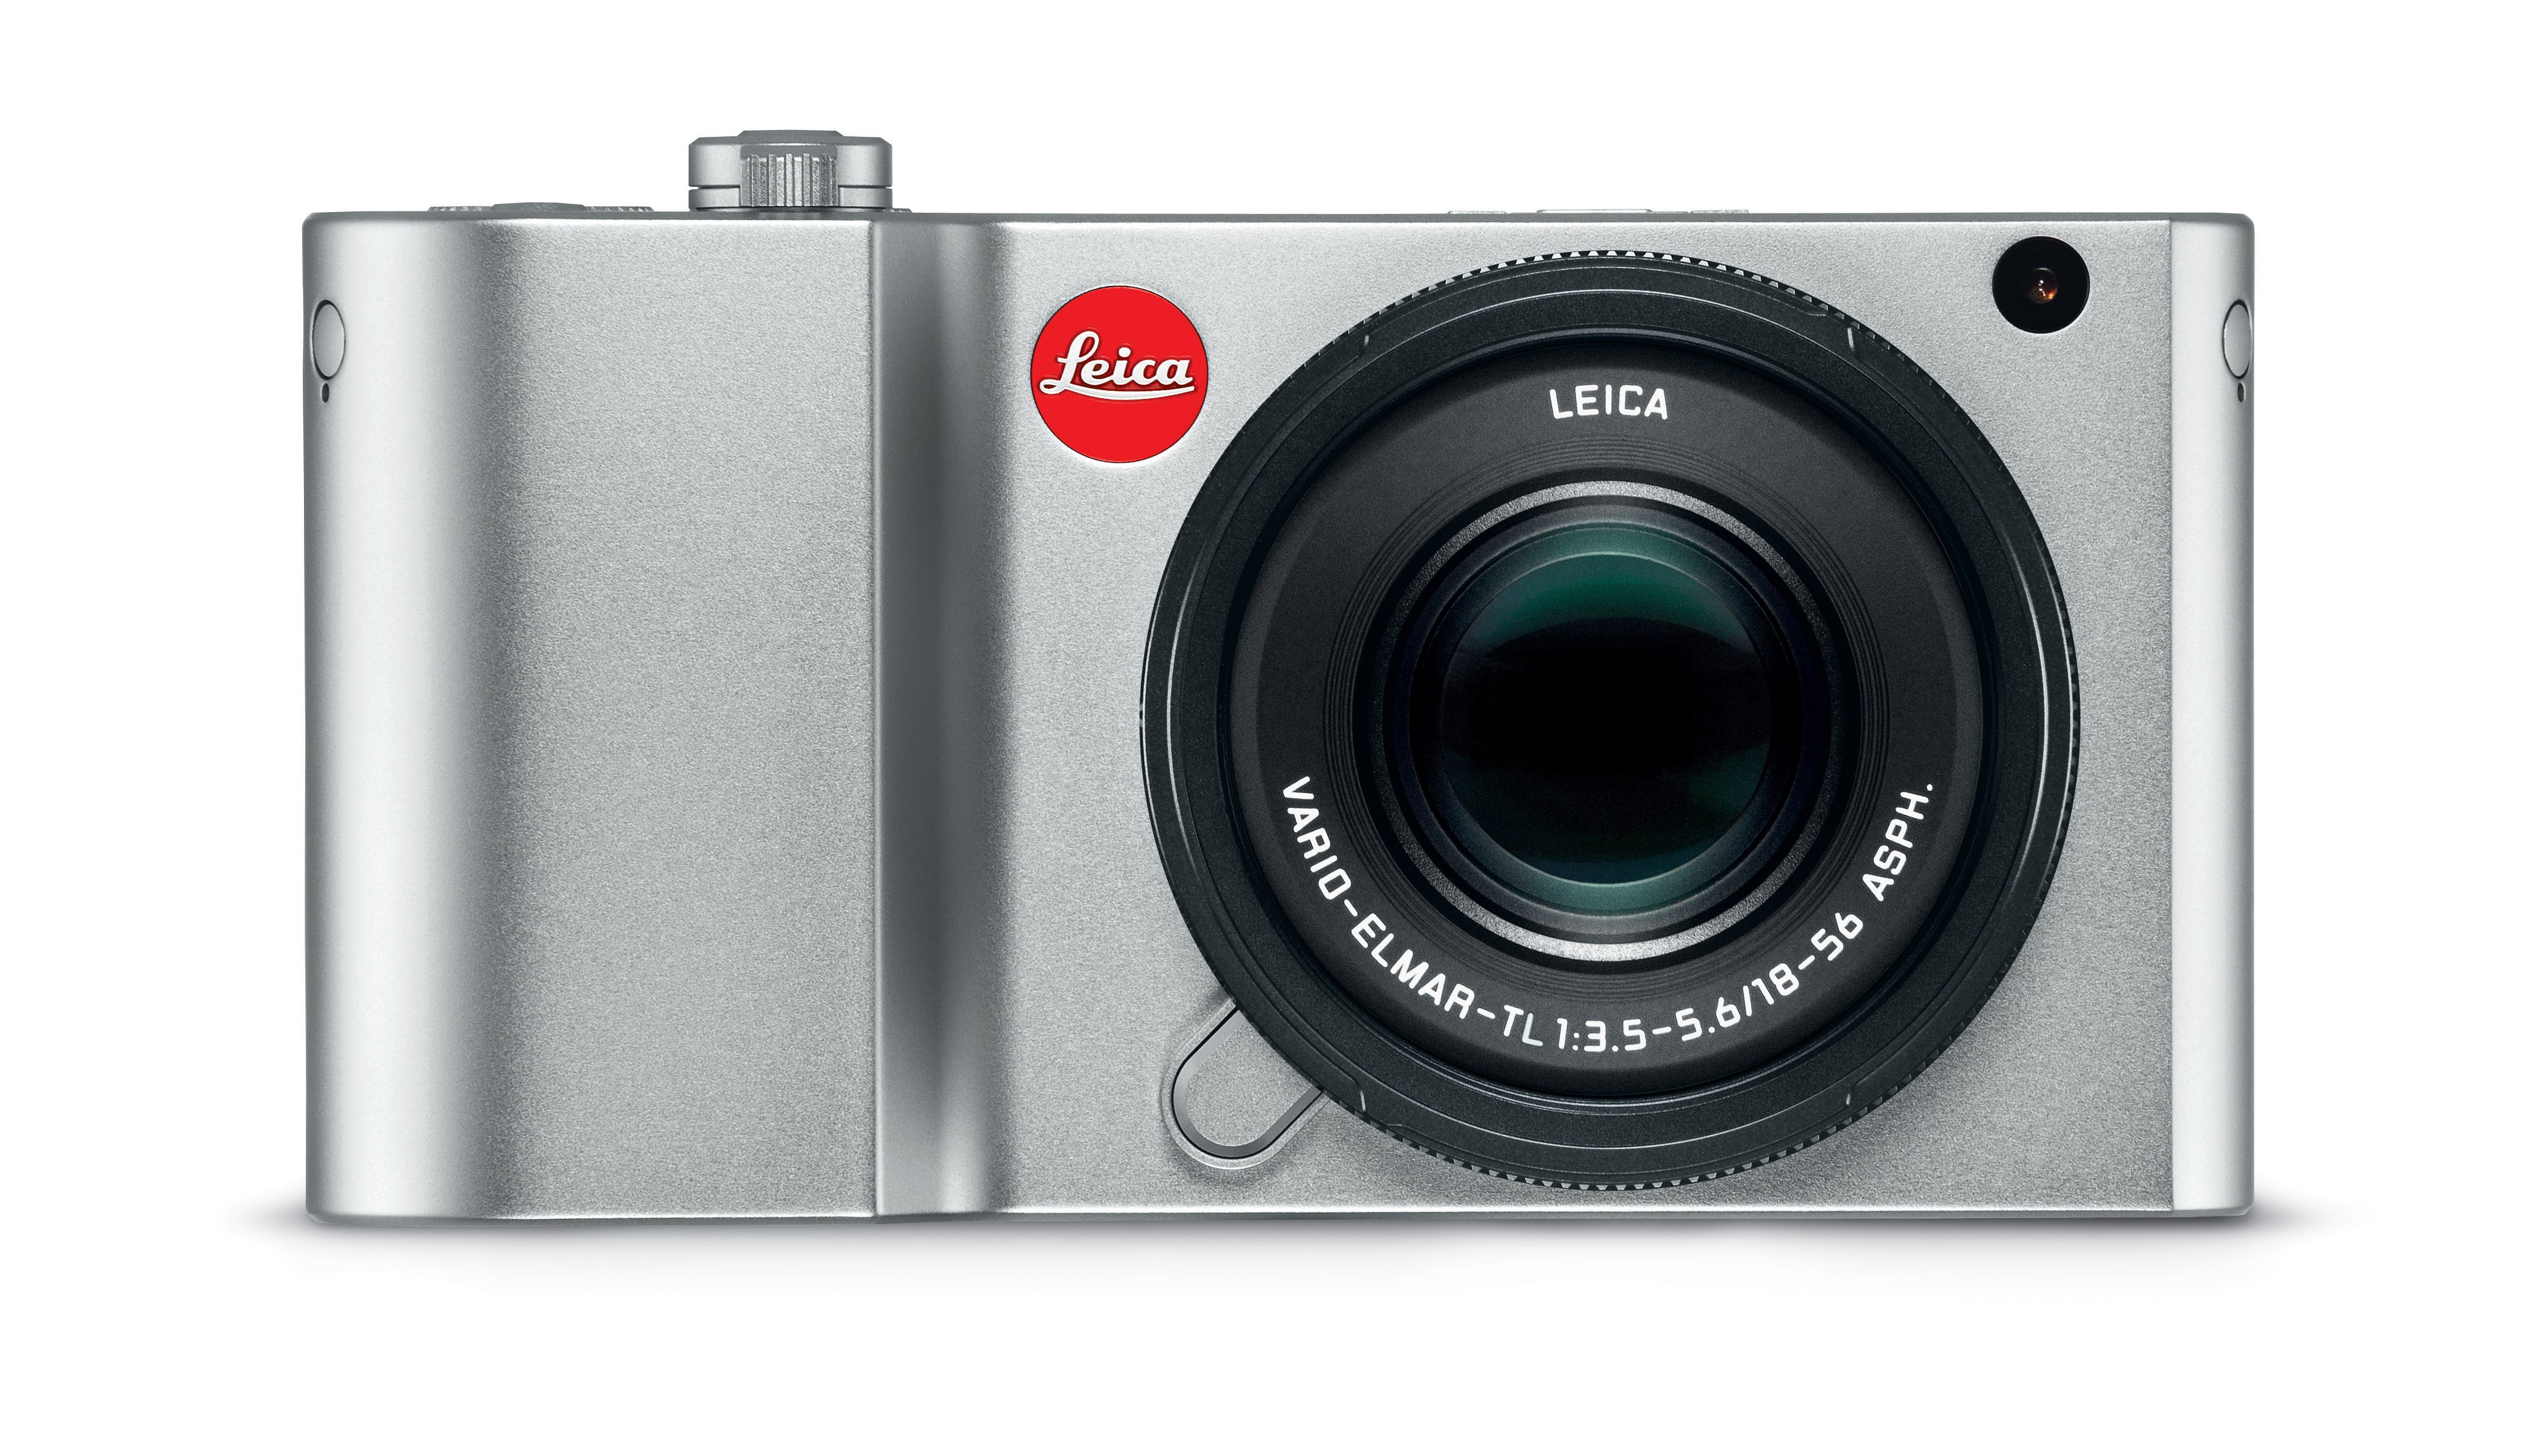 The new Leica TL2 camera